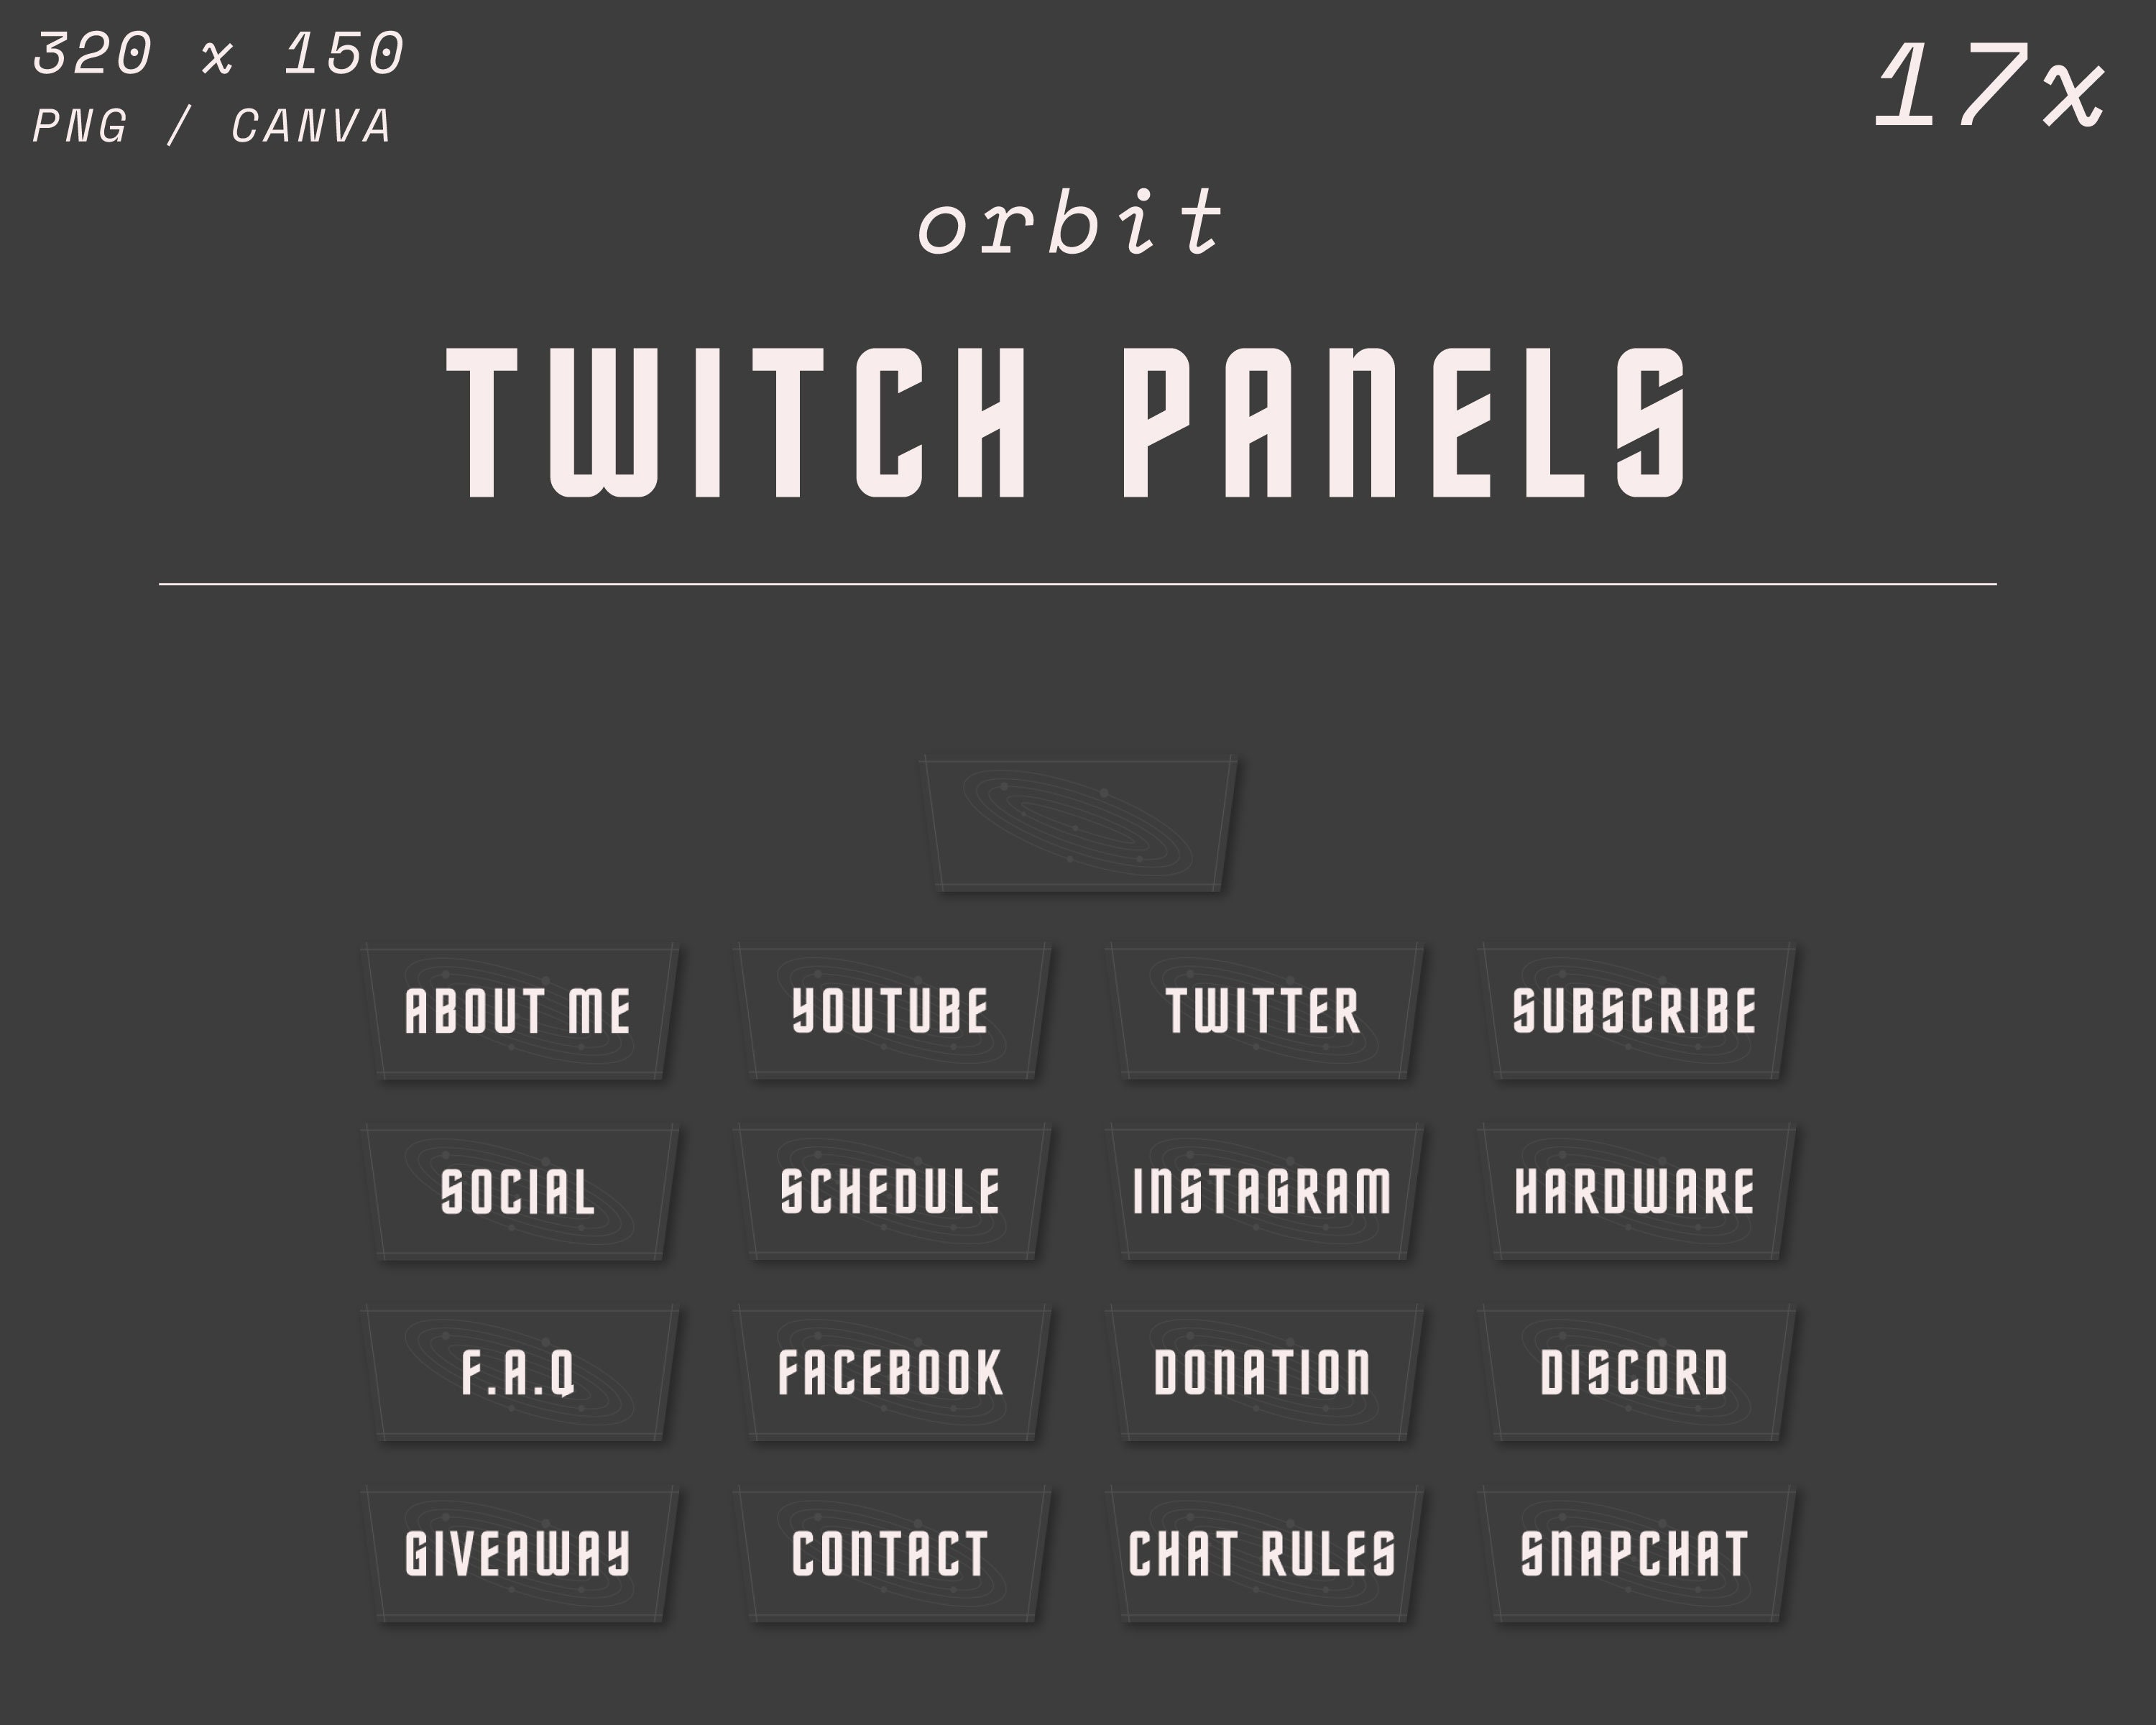 Twitch Panels Orbit - Etsy